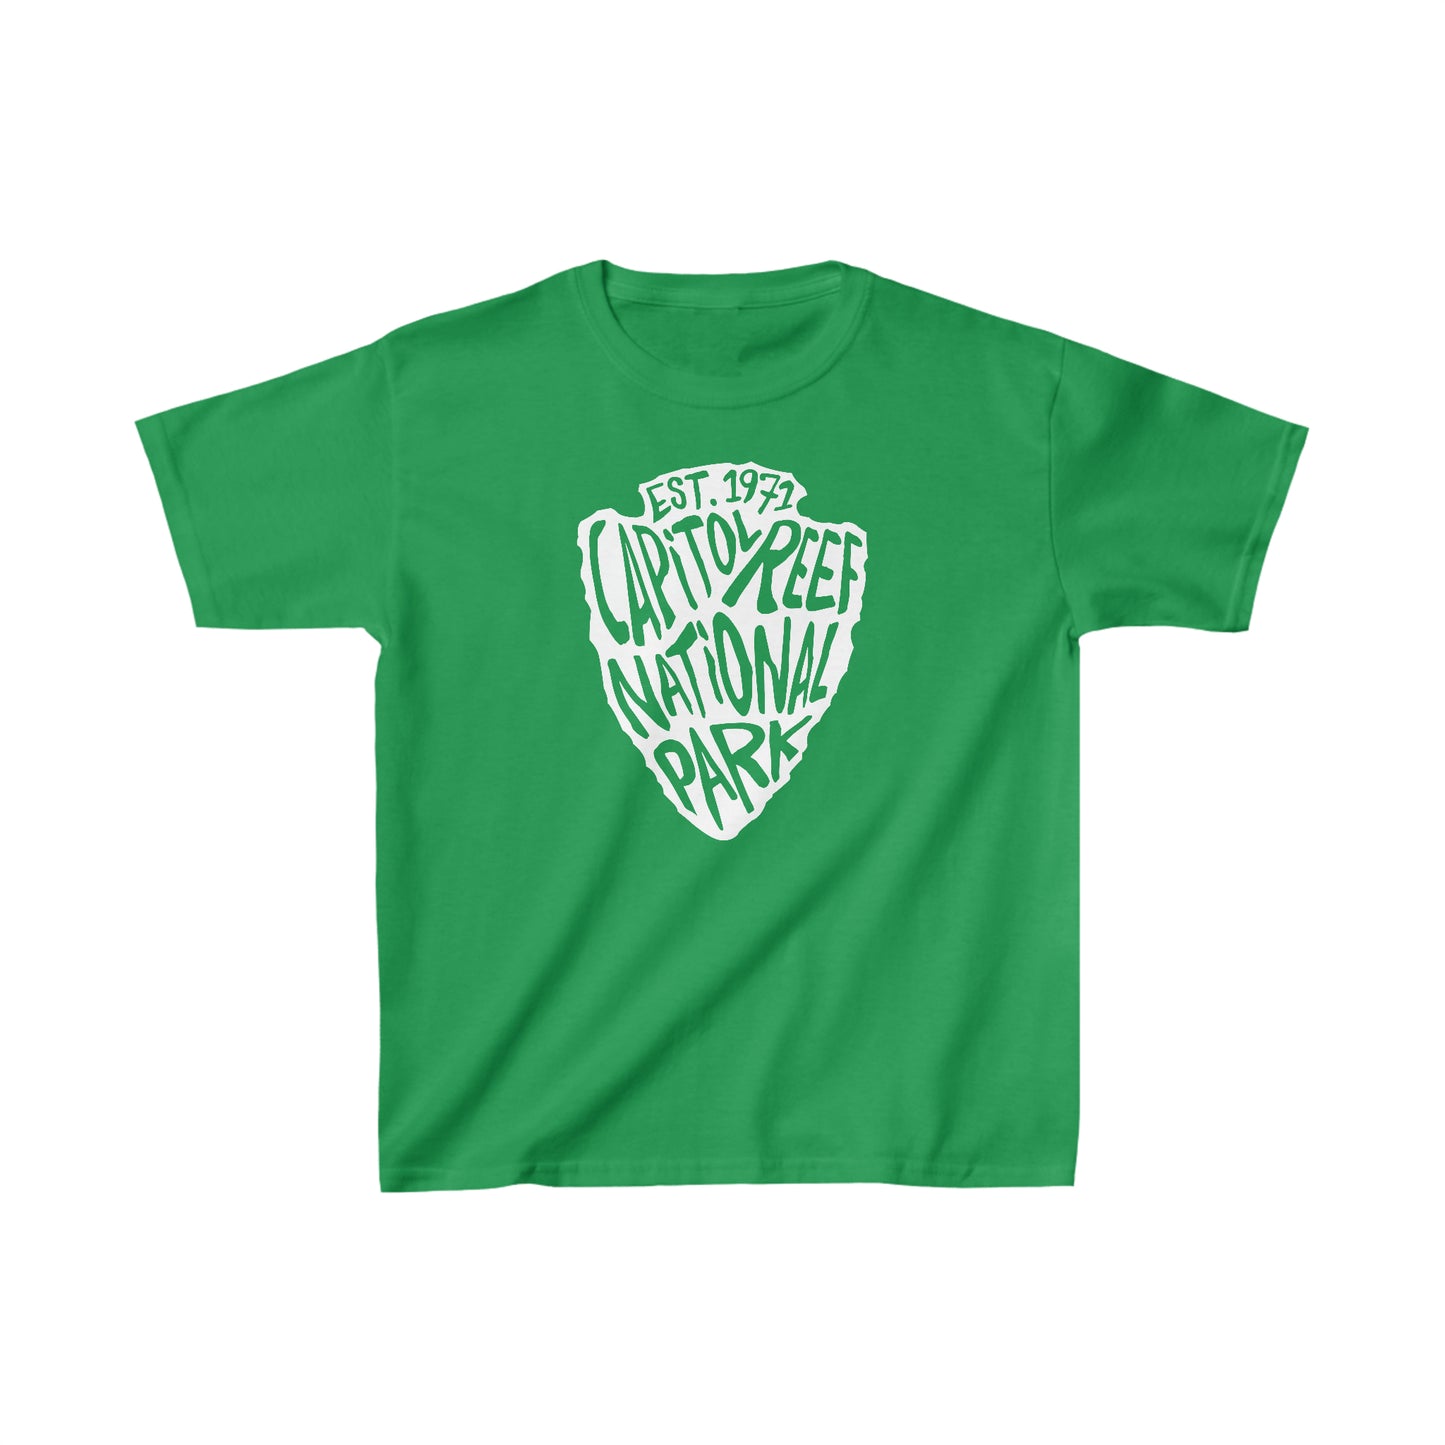 Capitol Reef National Park Child T-Shirt - Arrowhead Design